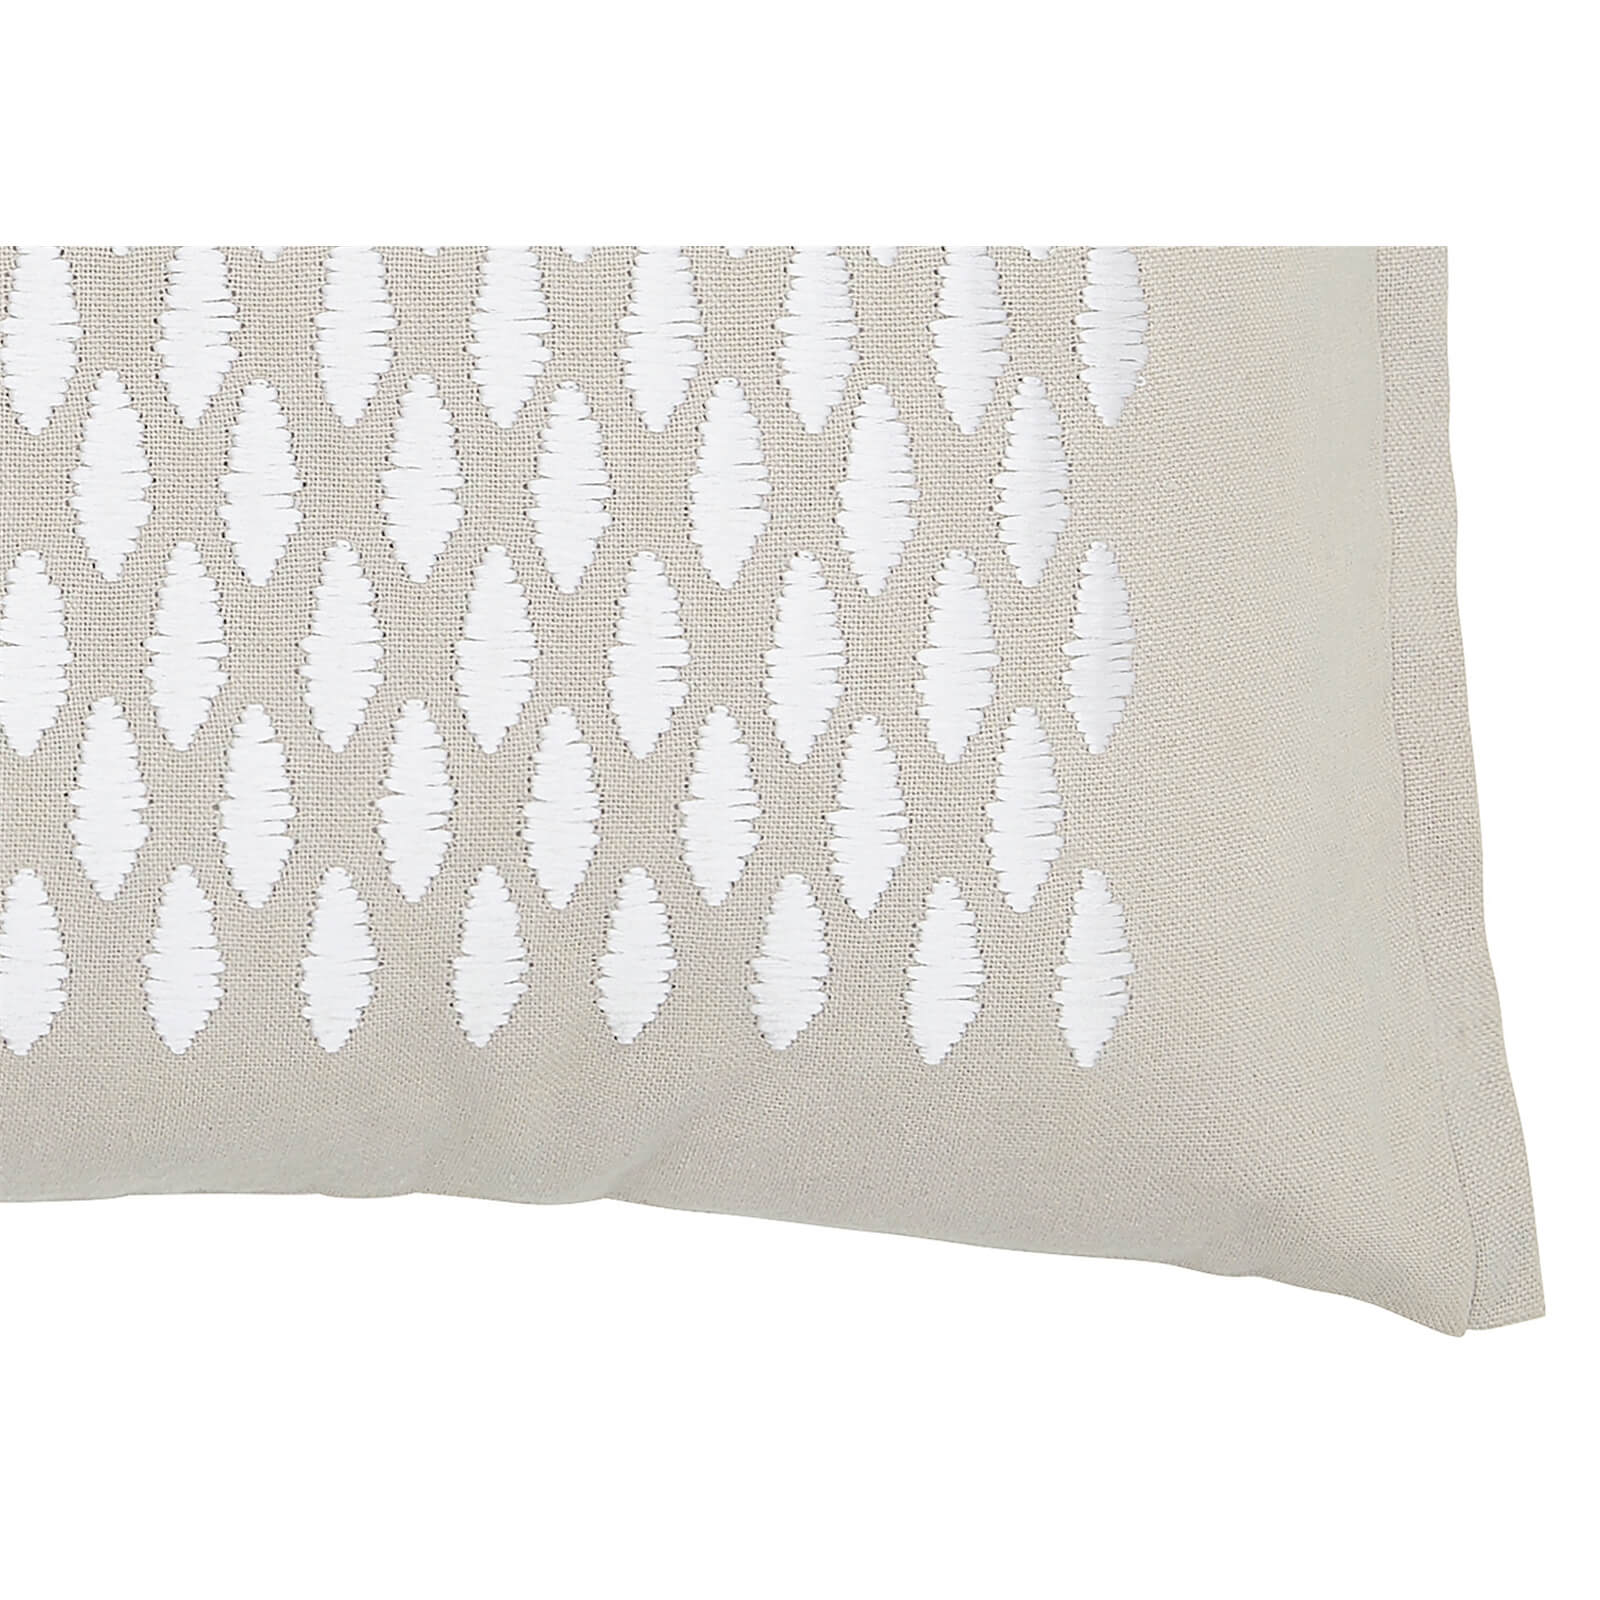 Murmur Seed Cushions 40x30cm - Linen